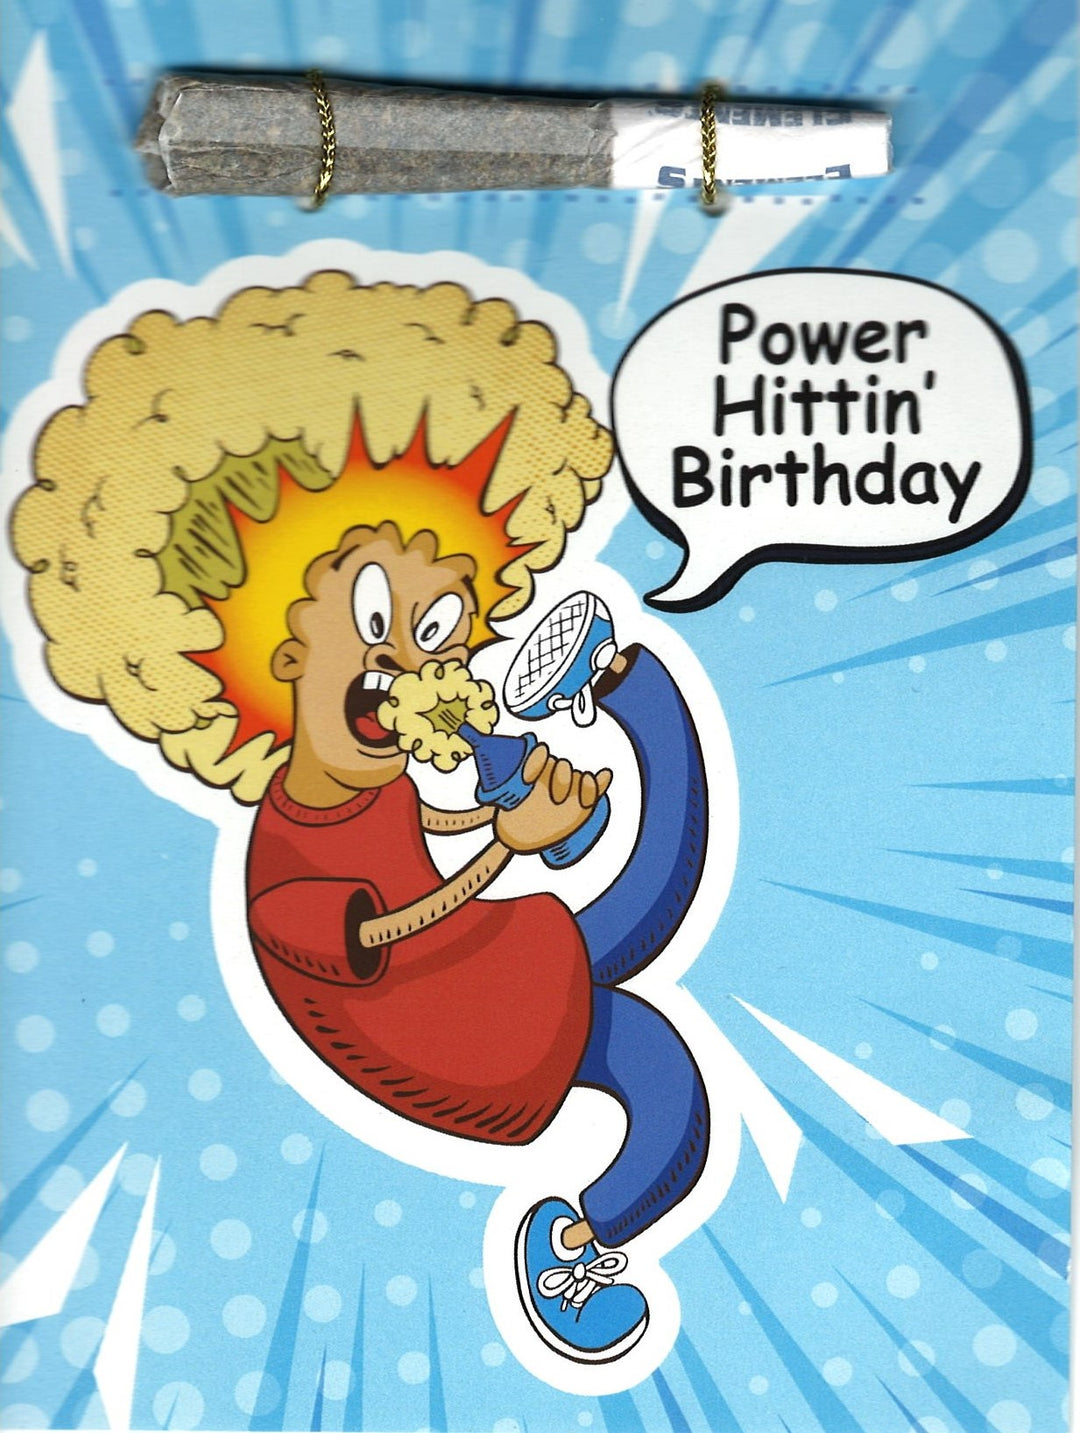 PowerHitter 5pk “Power Hittin’ Birthday” Card